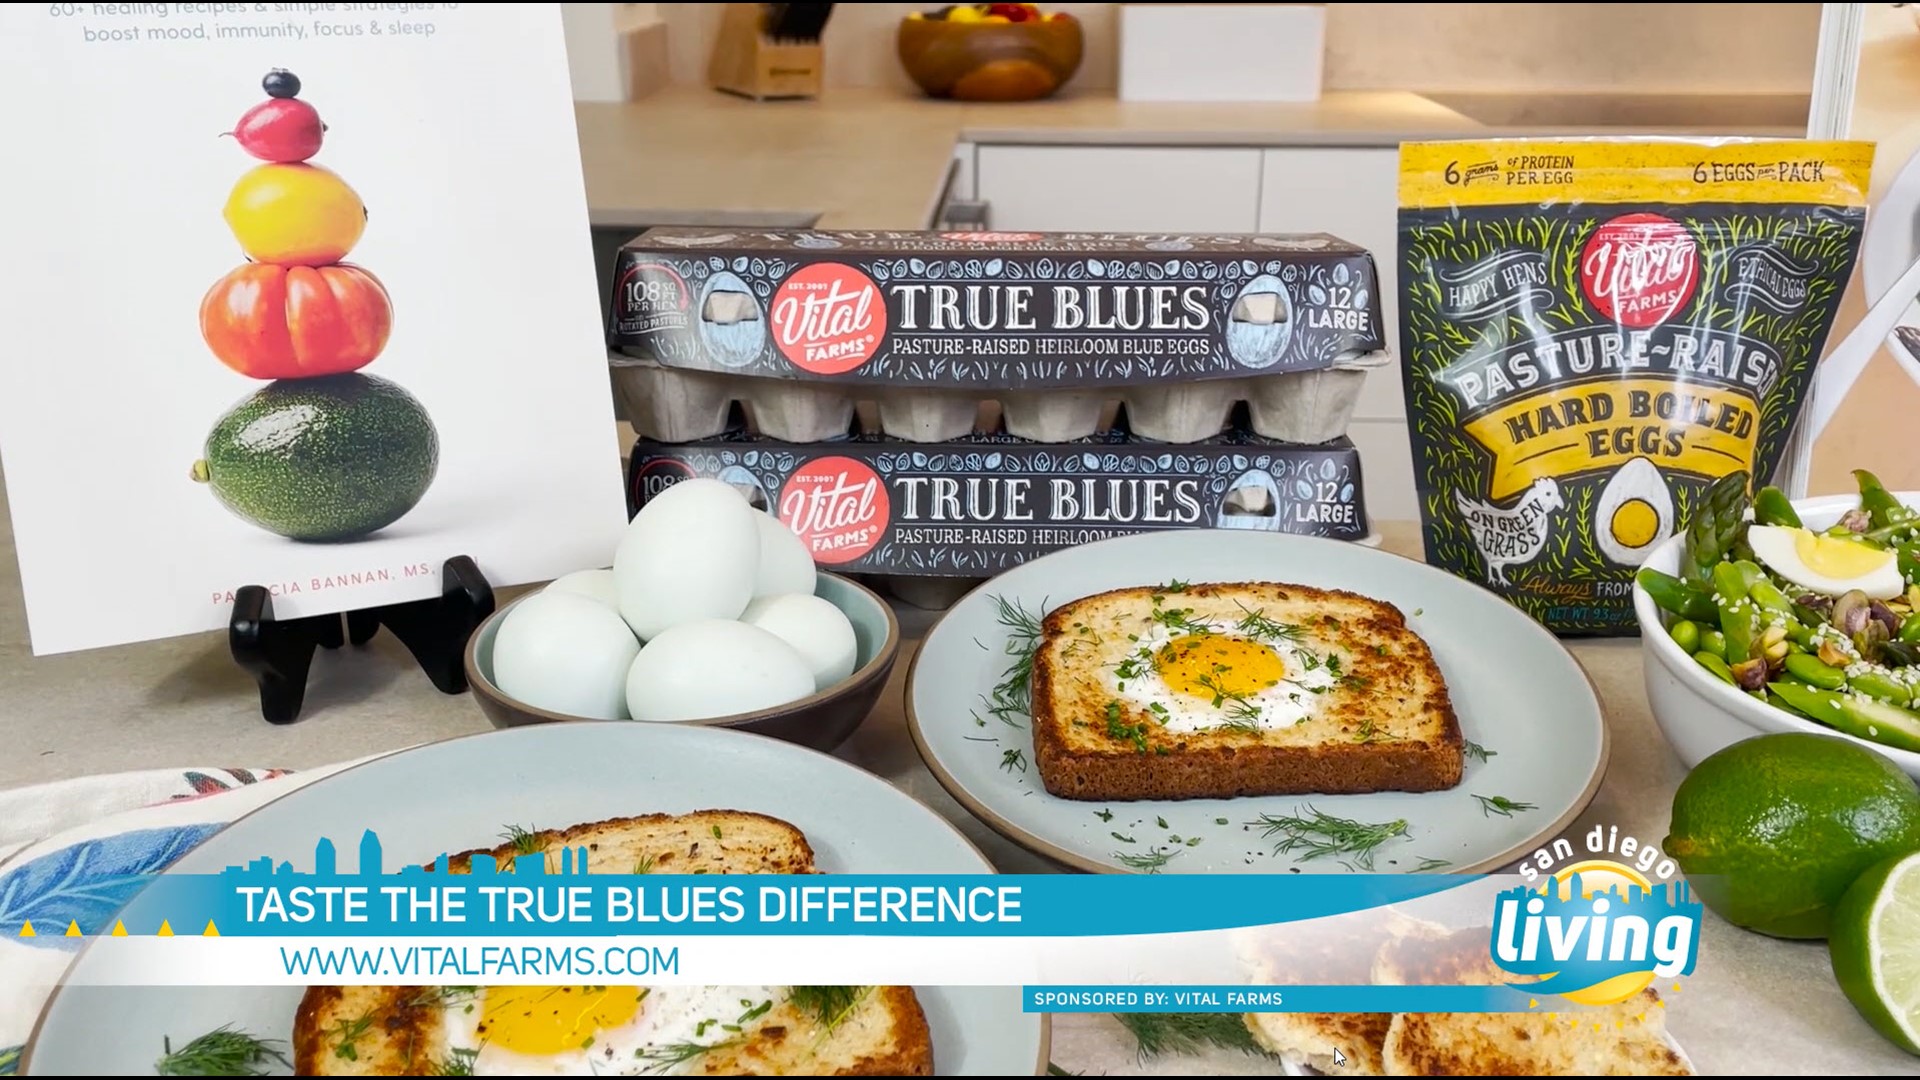 Egg-ceptional recipes with Vital Farms True Blues.  Sponsored by Vital Farms